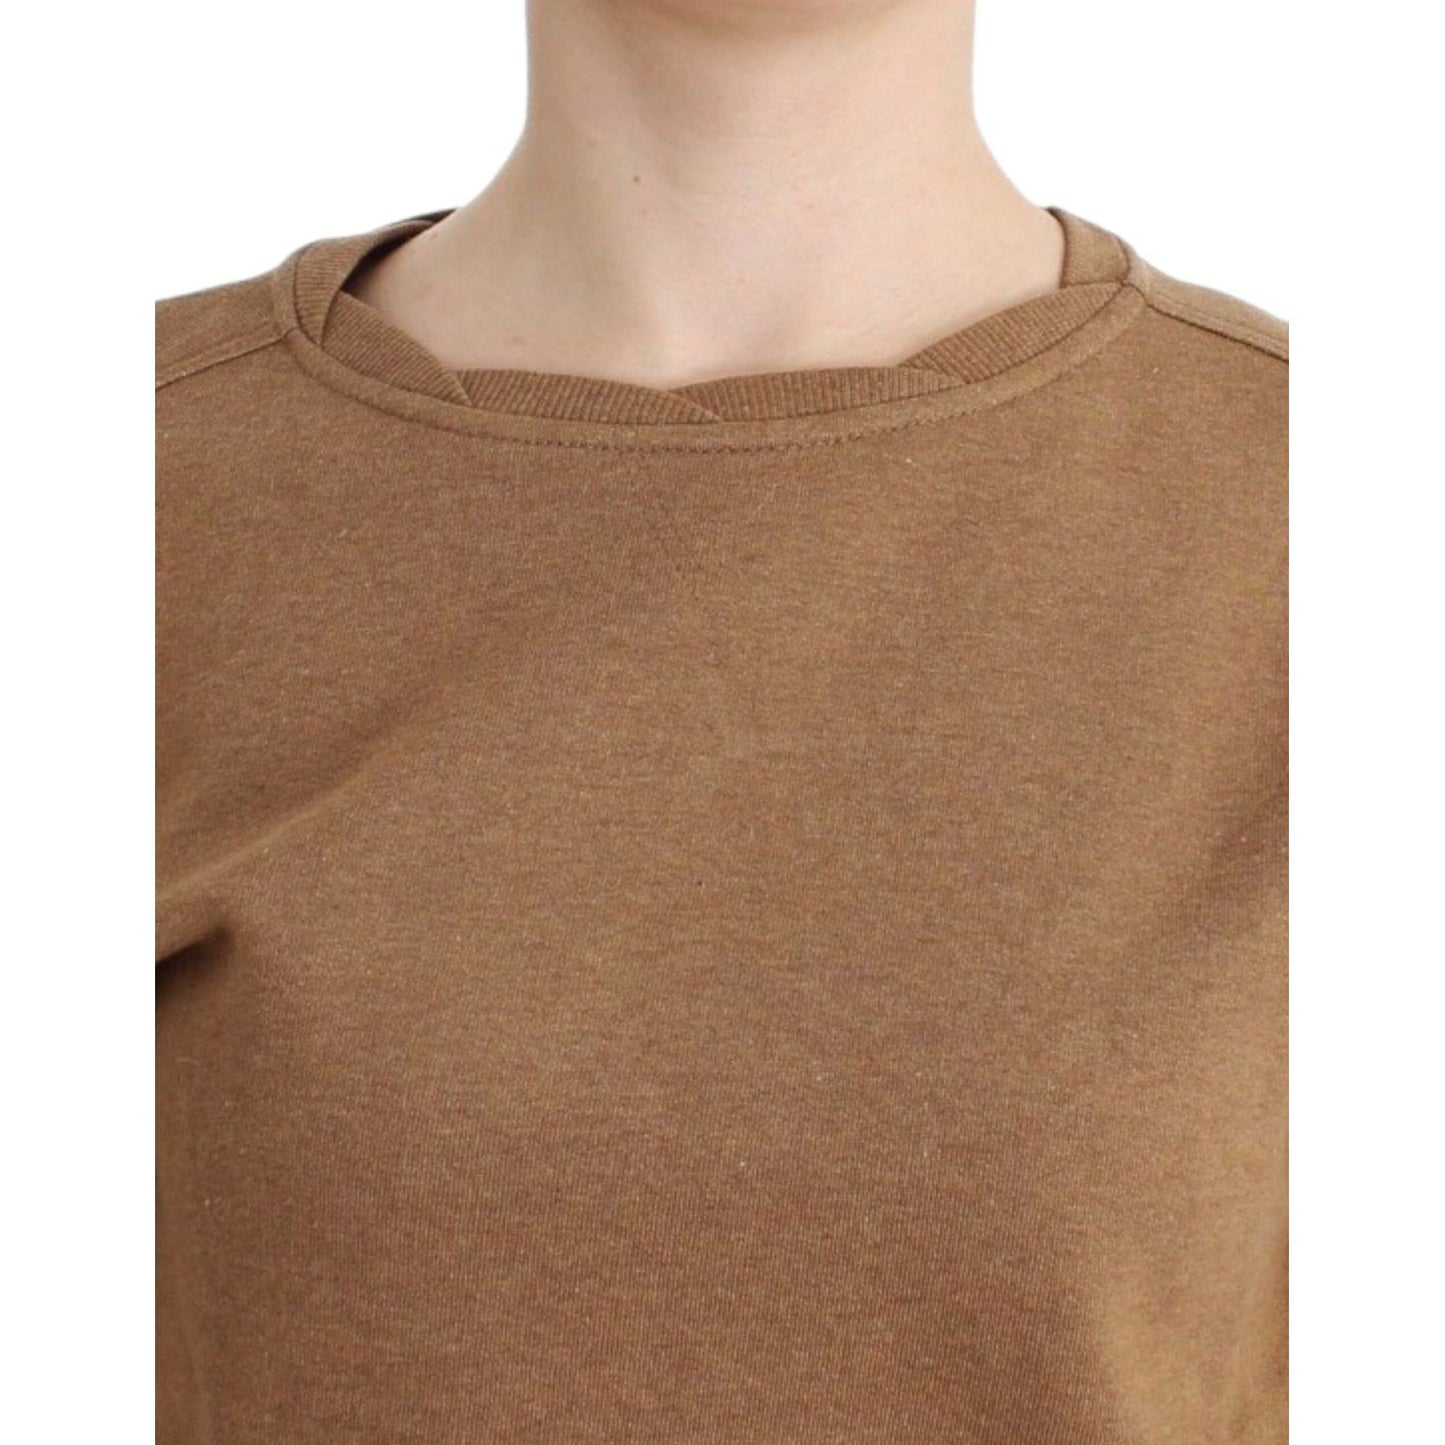 John Galliano Chic Brown Crewneck Cotton Sweater brown-crewneck-cotton-sweater 5844-brown-crewneck-cotton-sweater-4-scaled-24e7aba5-3c8.jpg